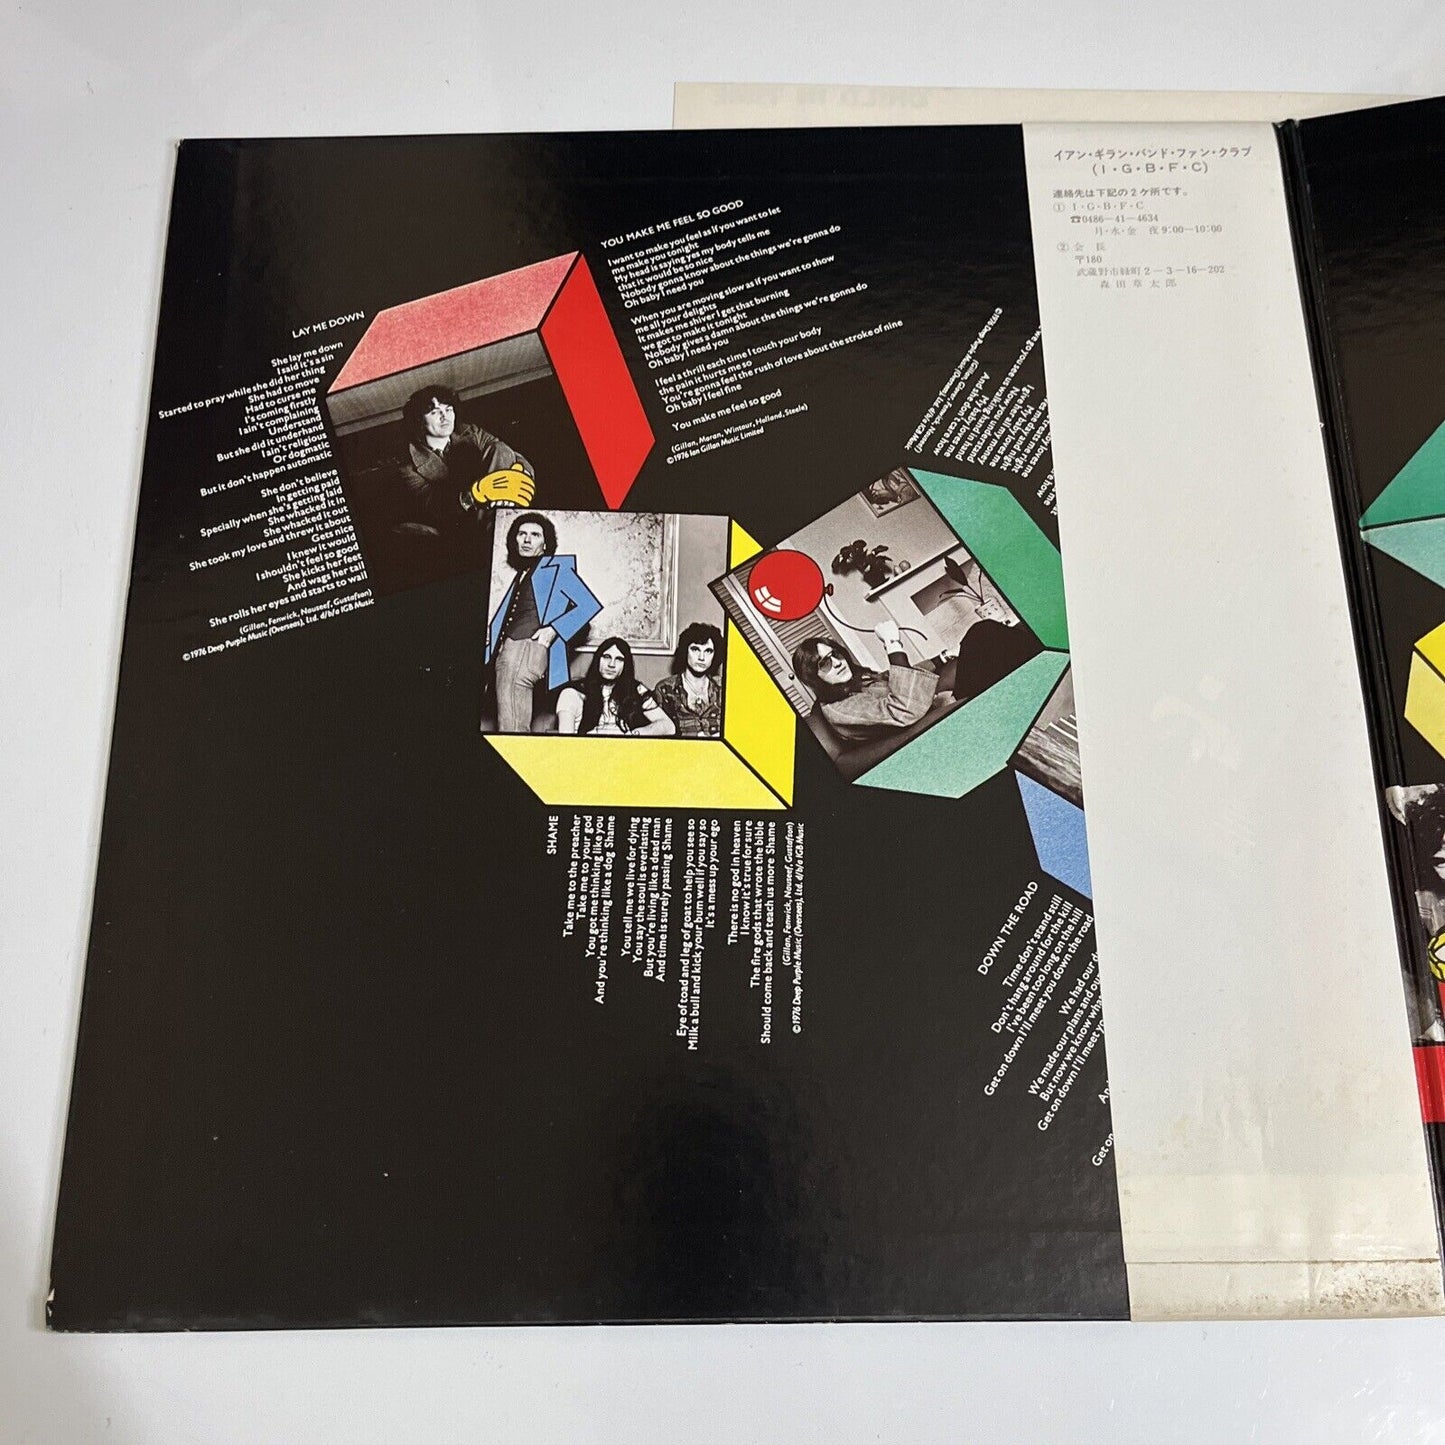 Ian Gillan Band – Child In Time 1976 LP Vinyl Record Gatefold Obi MWF 1005